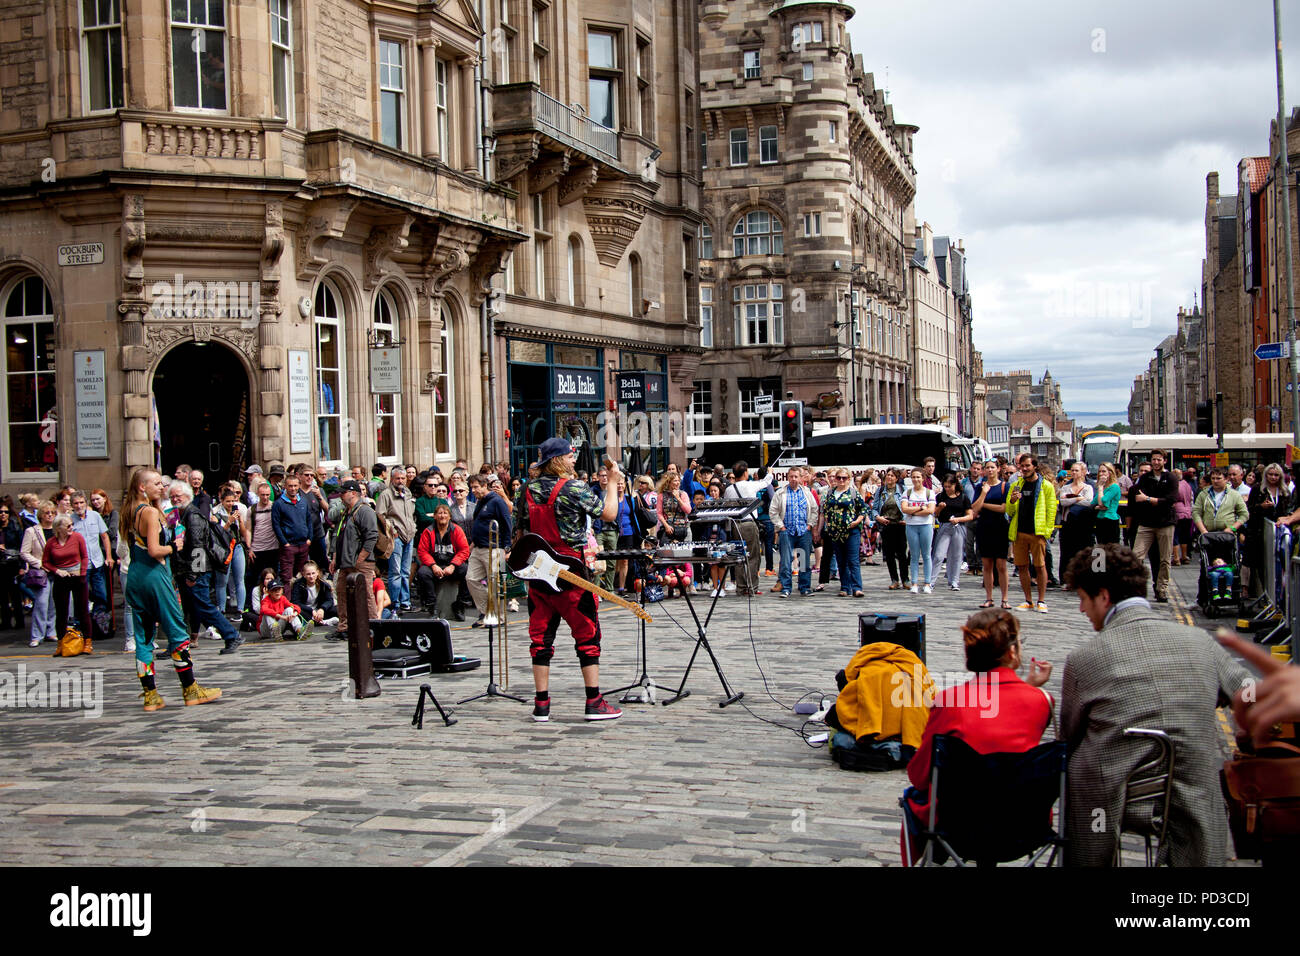 Edinburgh, Scotland, UK. 6 Aug. 2018, Edinburgh Fringe Festival street performers on Royal Mile. Stock Photo